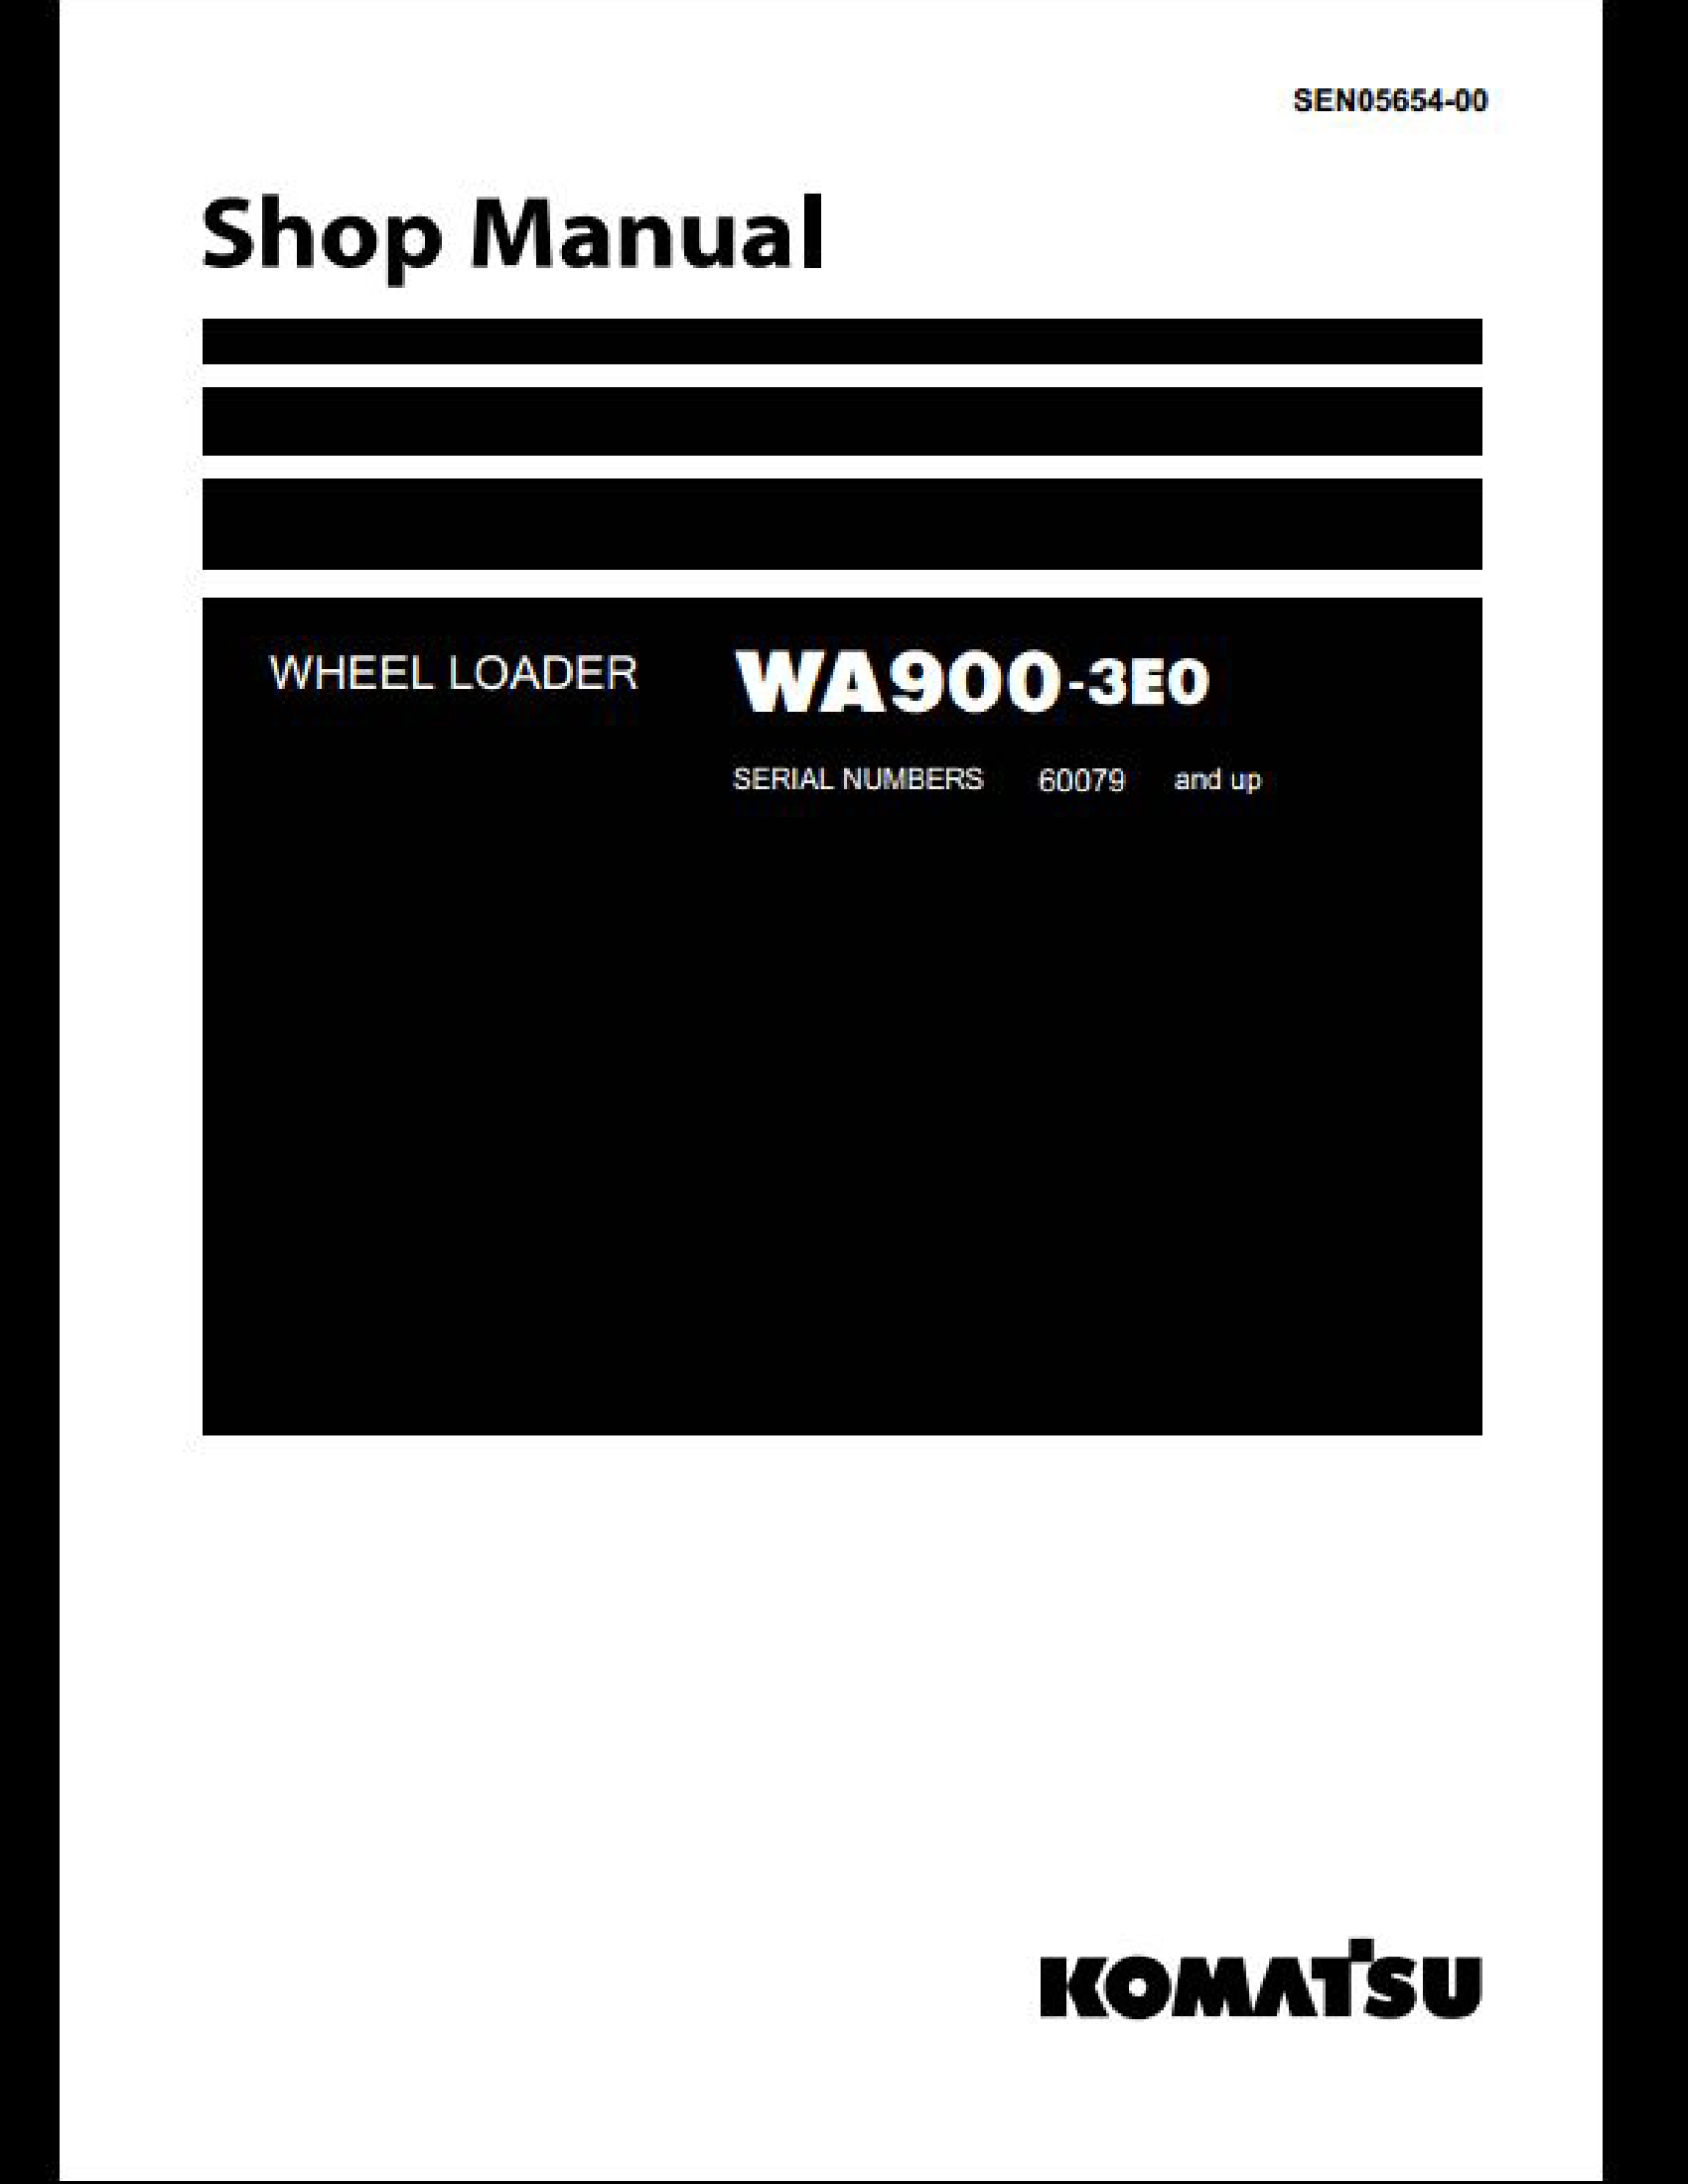 KOMATSU WA900-3E0 Wheel Loaders manual pdf